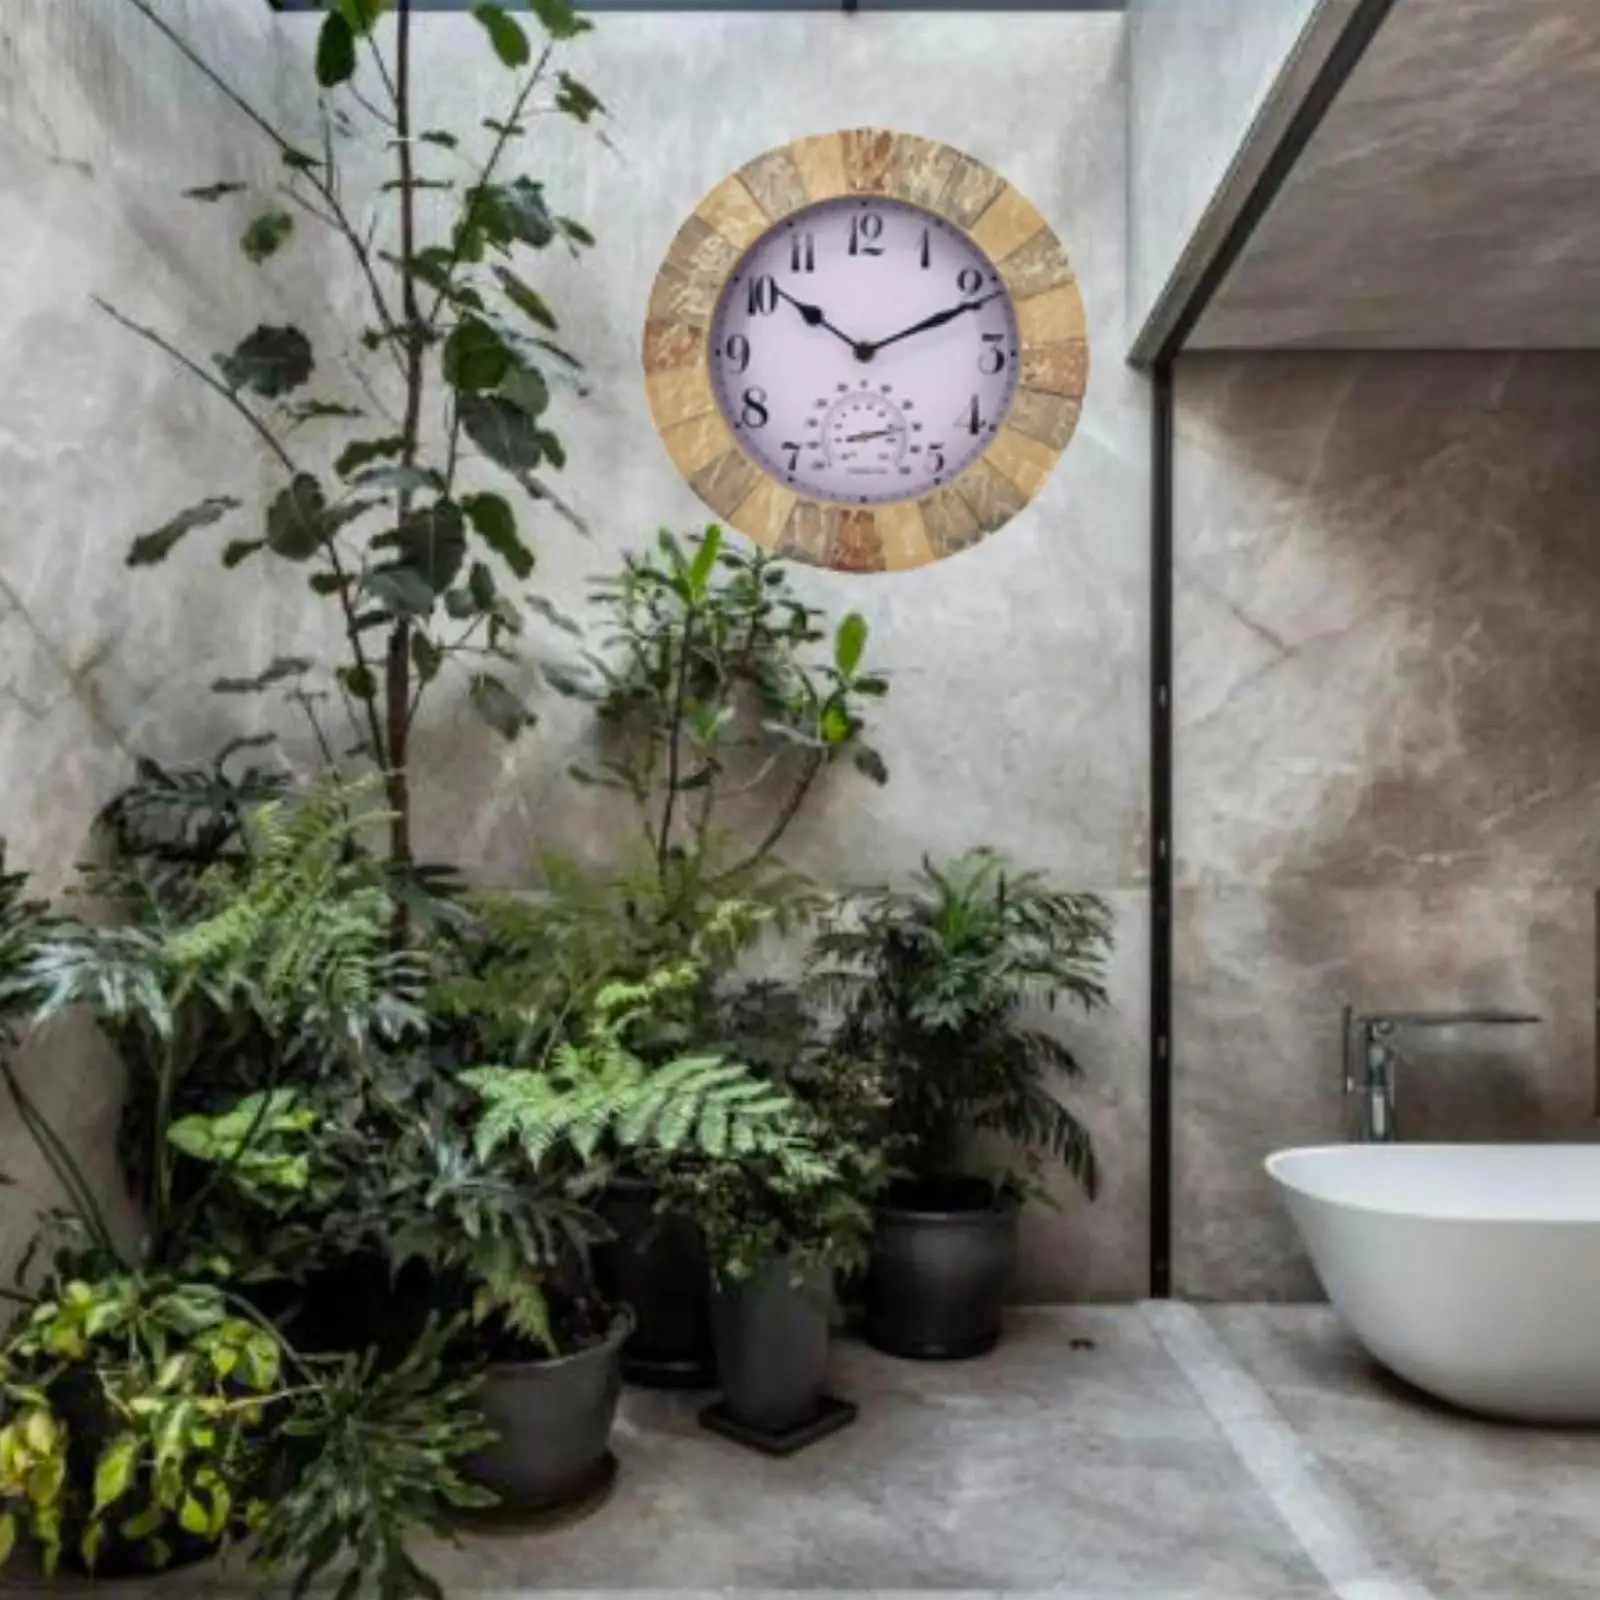 Multipurpose Outdoor Wall Clock Waterproof Temperature Display Silent 10inch Clocks for Garden Home Living Room Decor